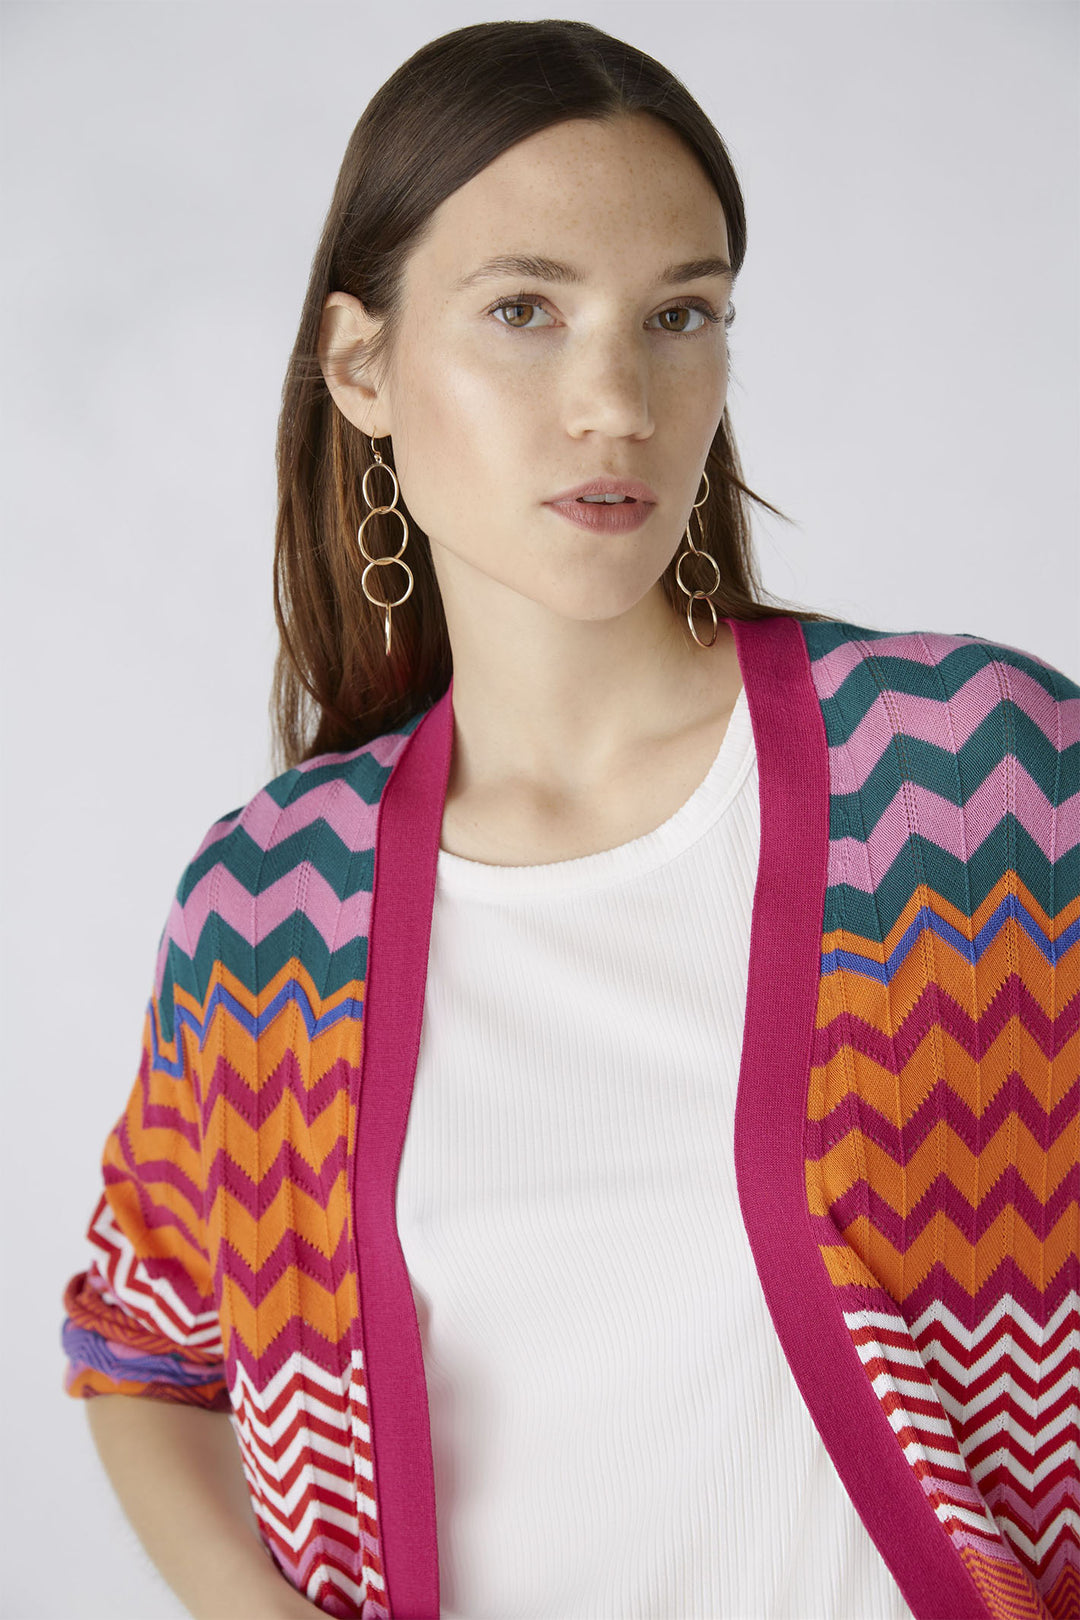 Oui 87926 Pink Multicolour ZigZag Long Knitted Cardigan - Olivia Grace Fashion